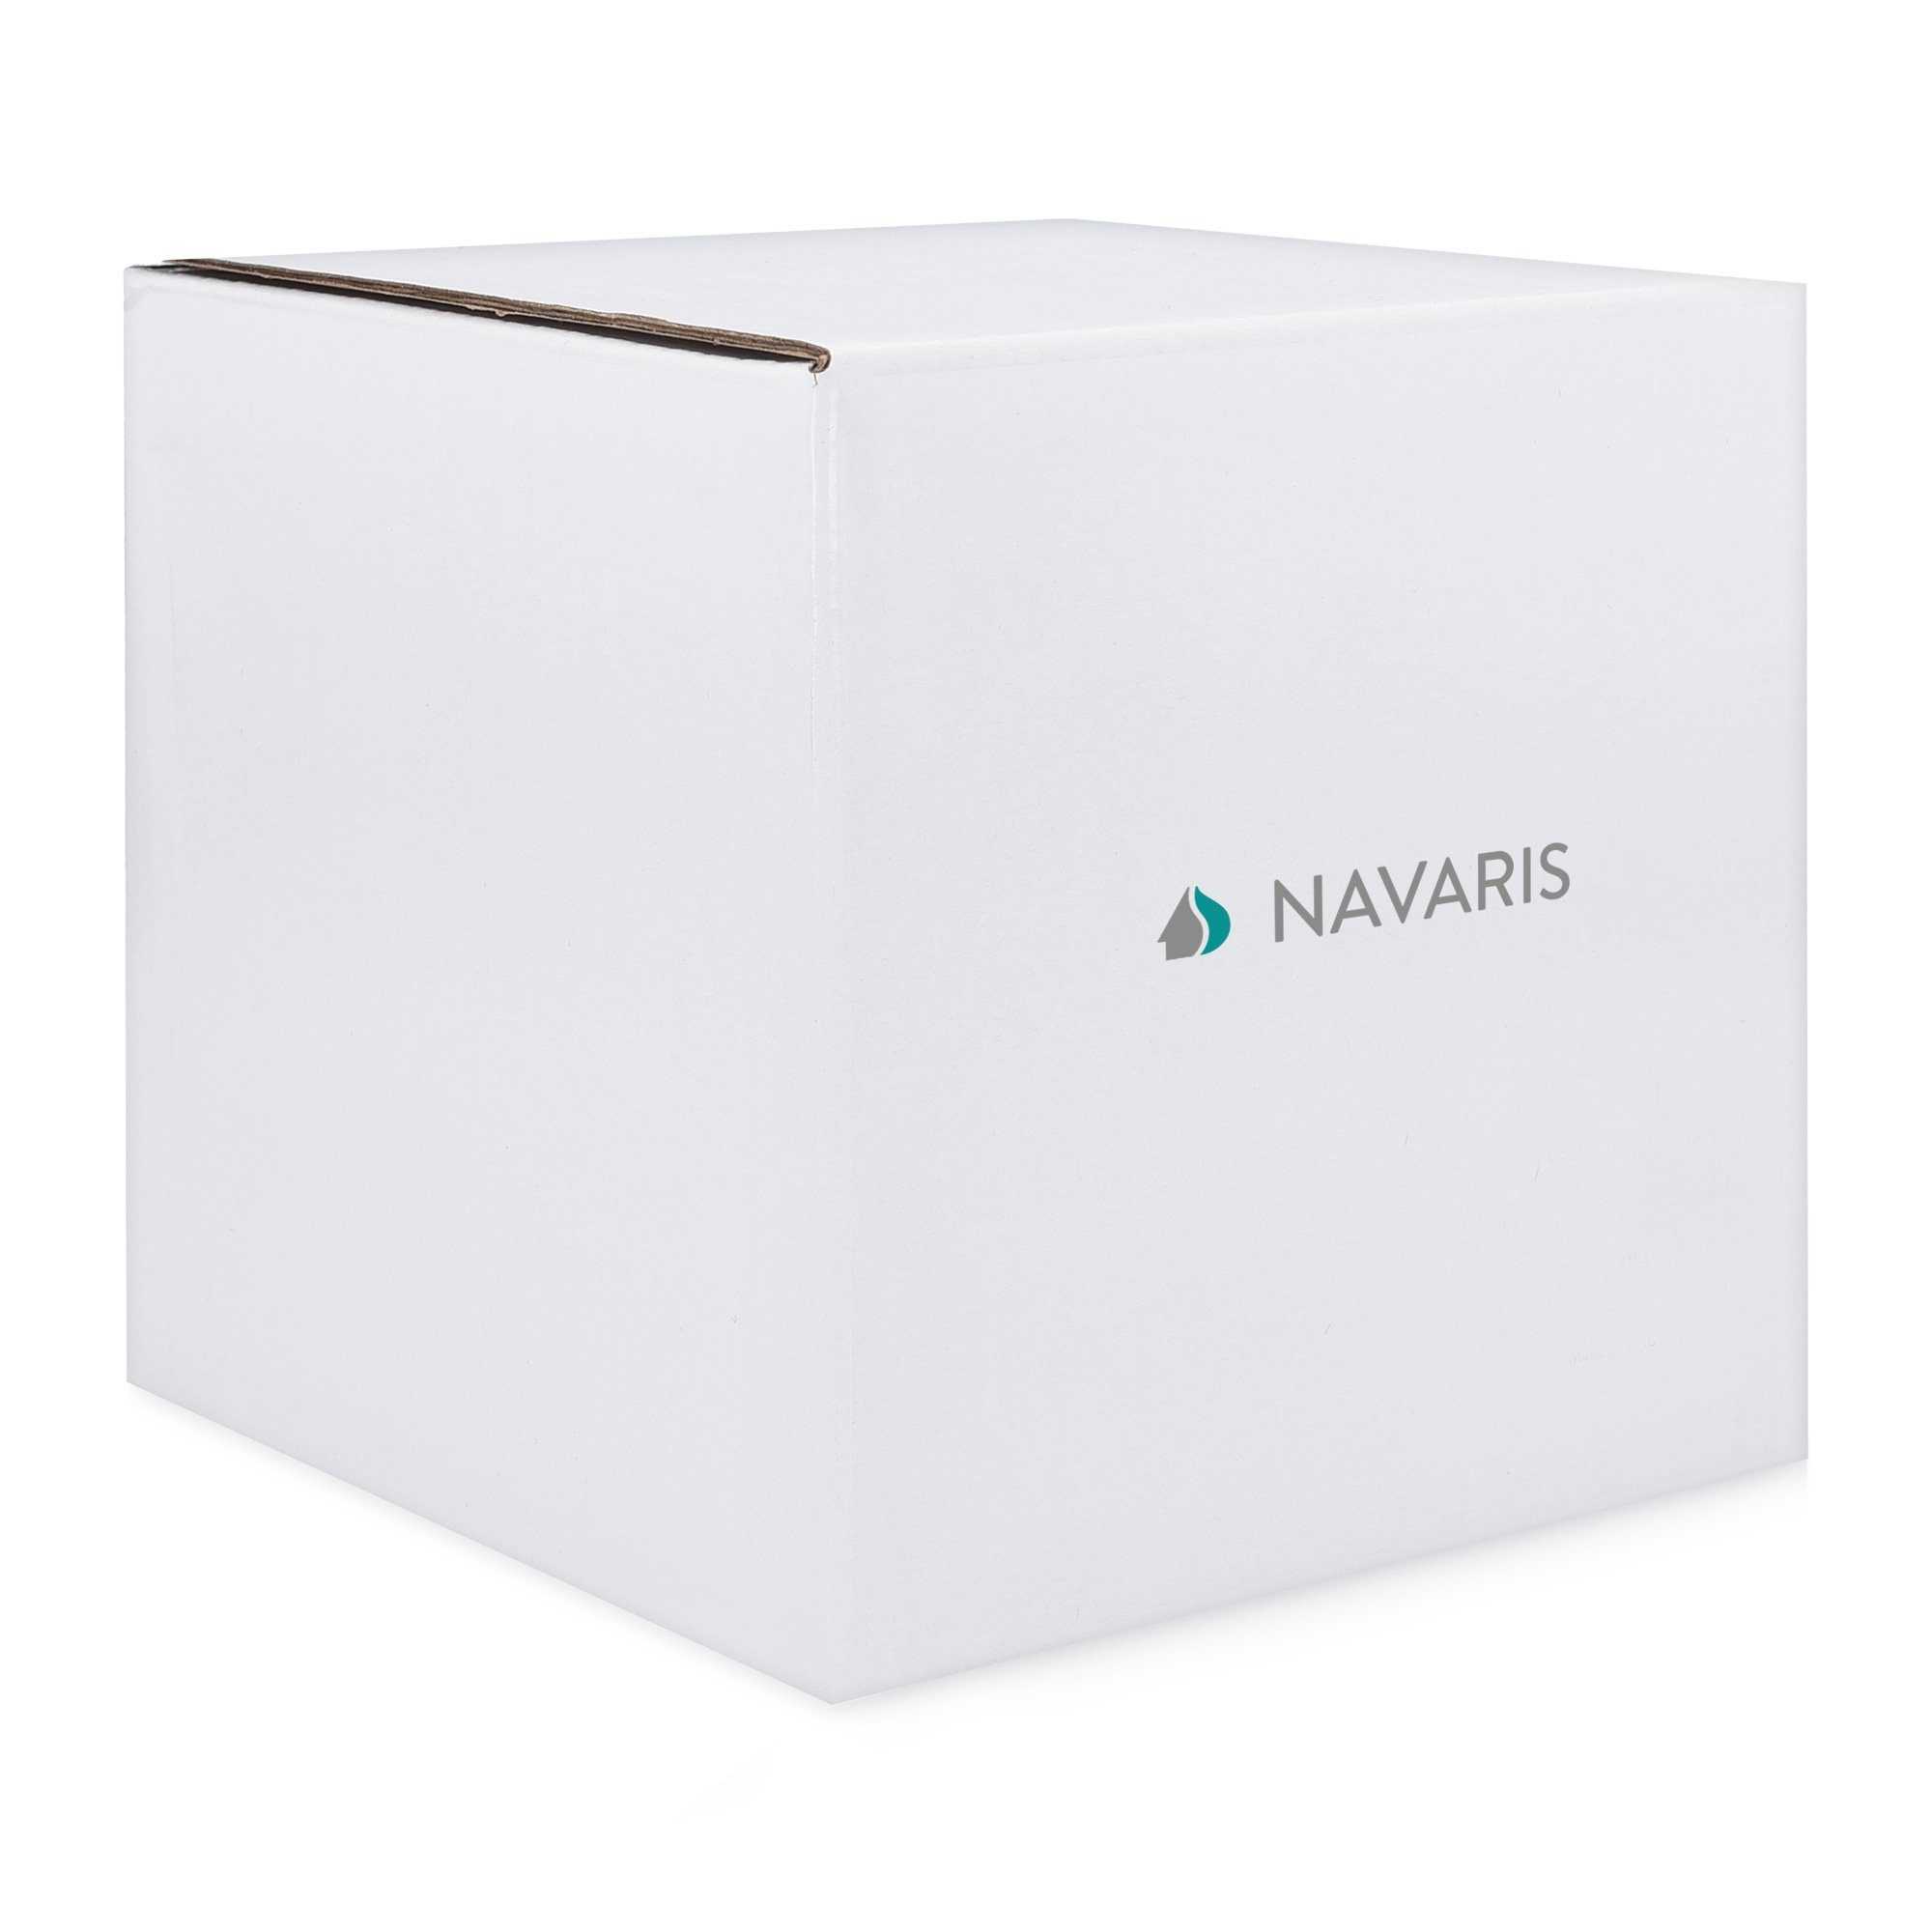 Navaris Saugroboter Zubehör-Set Asche Filter HEPA (1-tlg) Ersatzfilter, Feinstaubfilter, Aschesauger, für